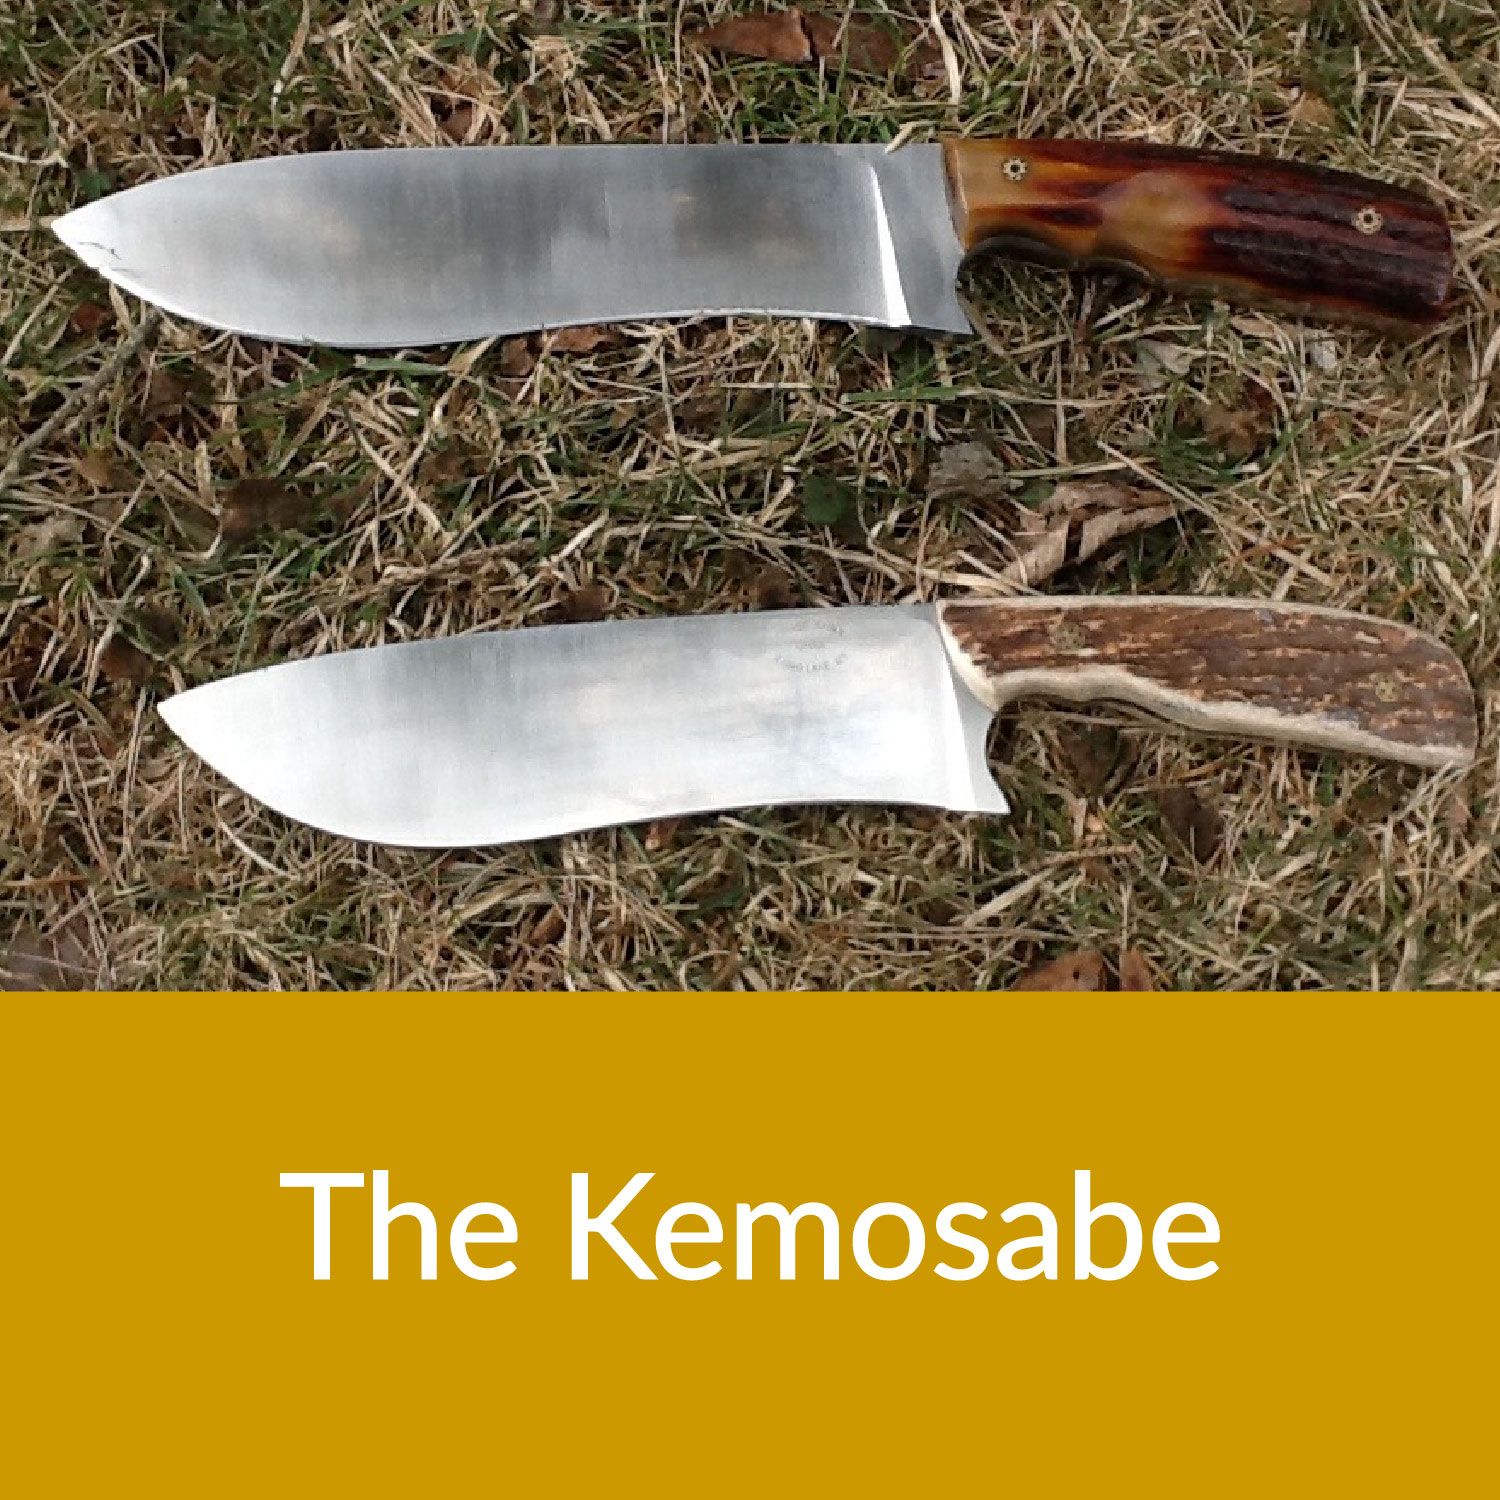 The Kemosabe